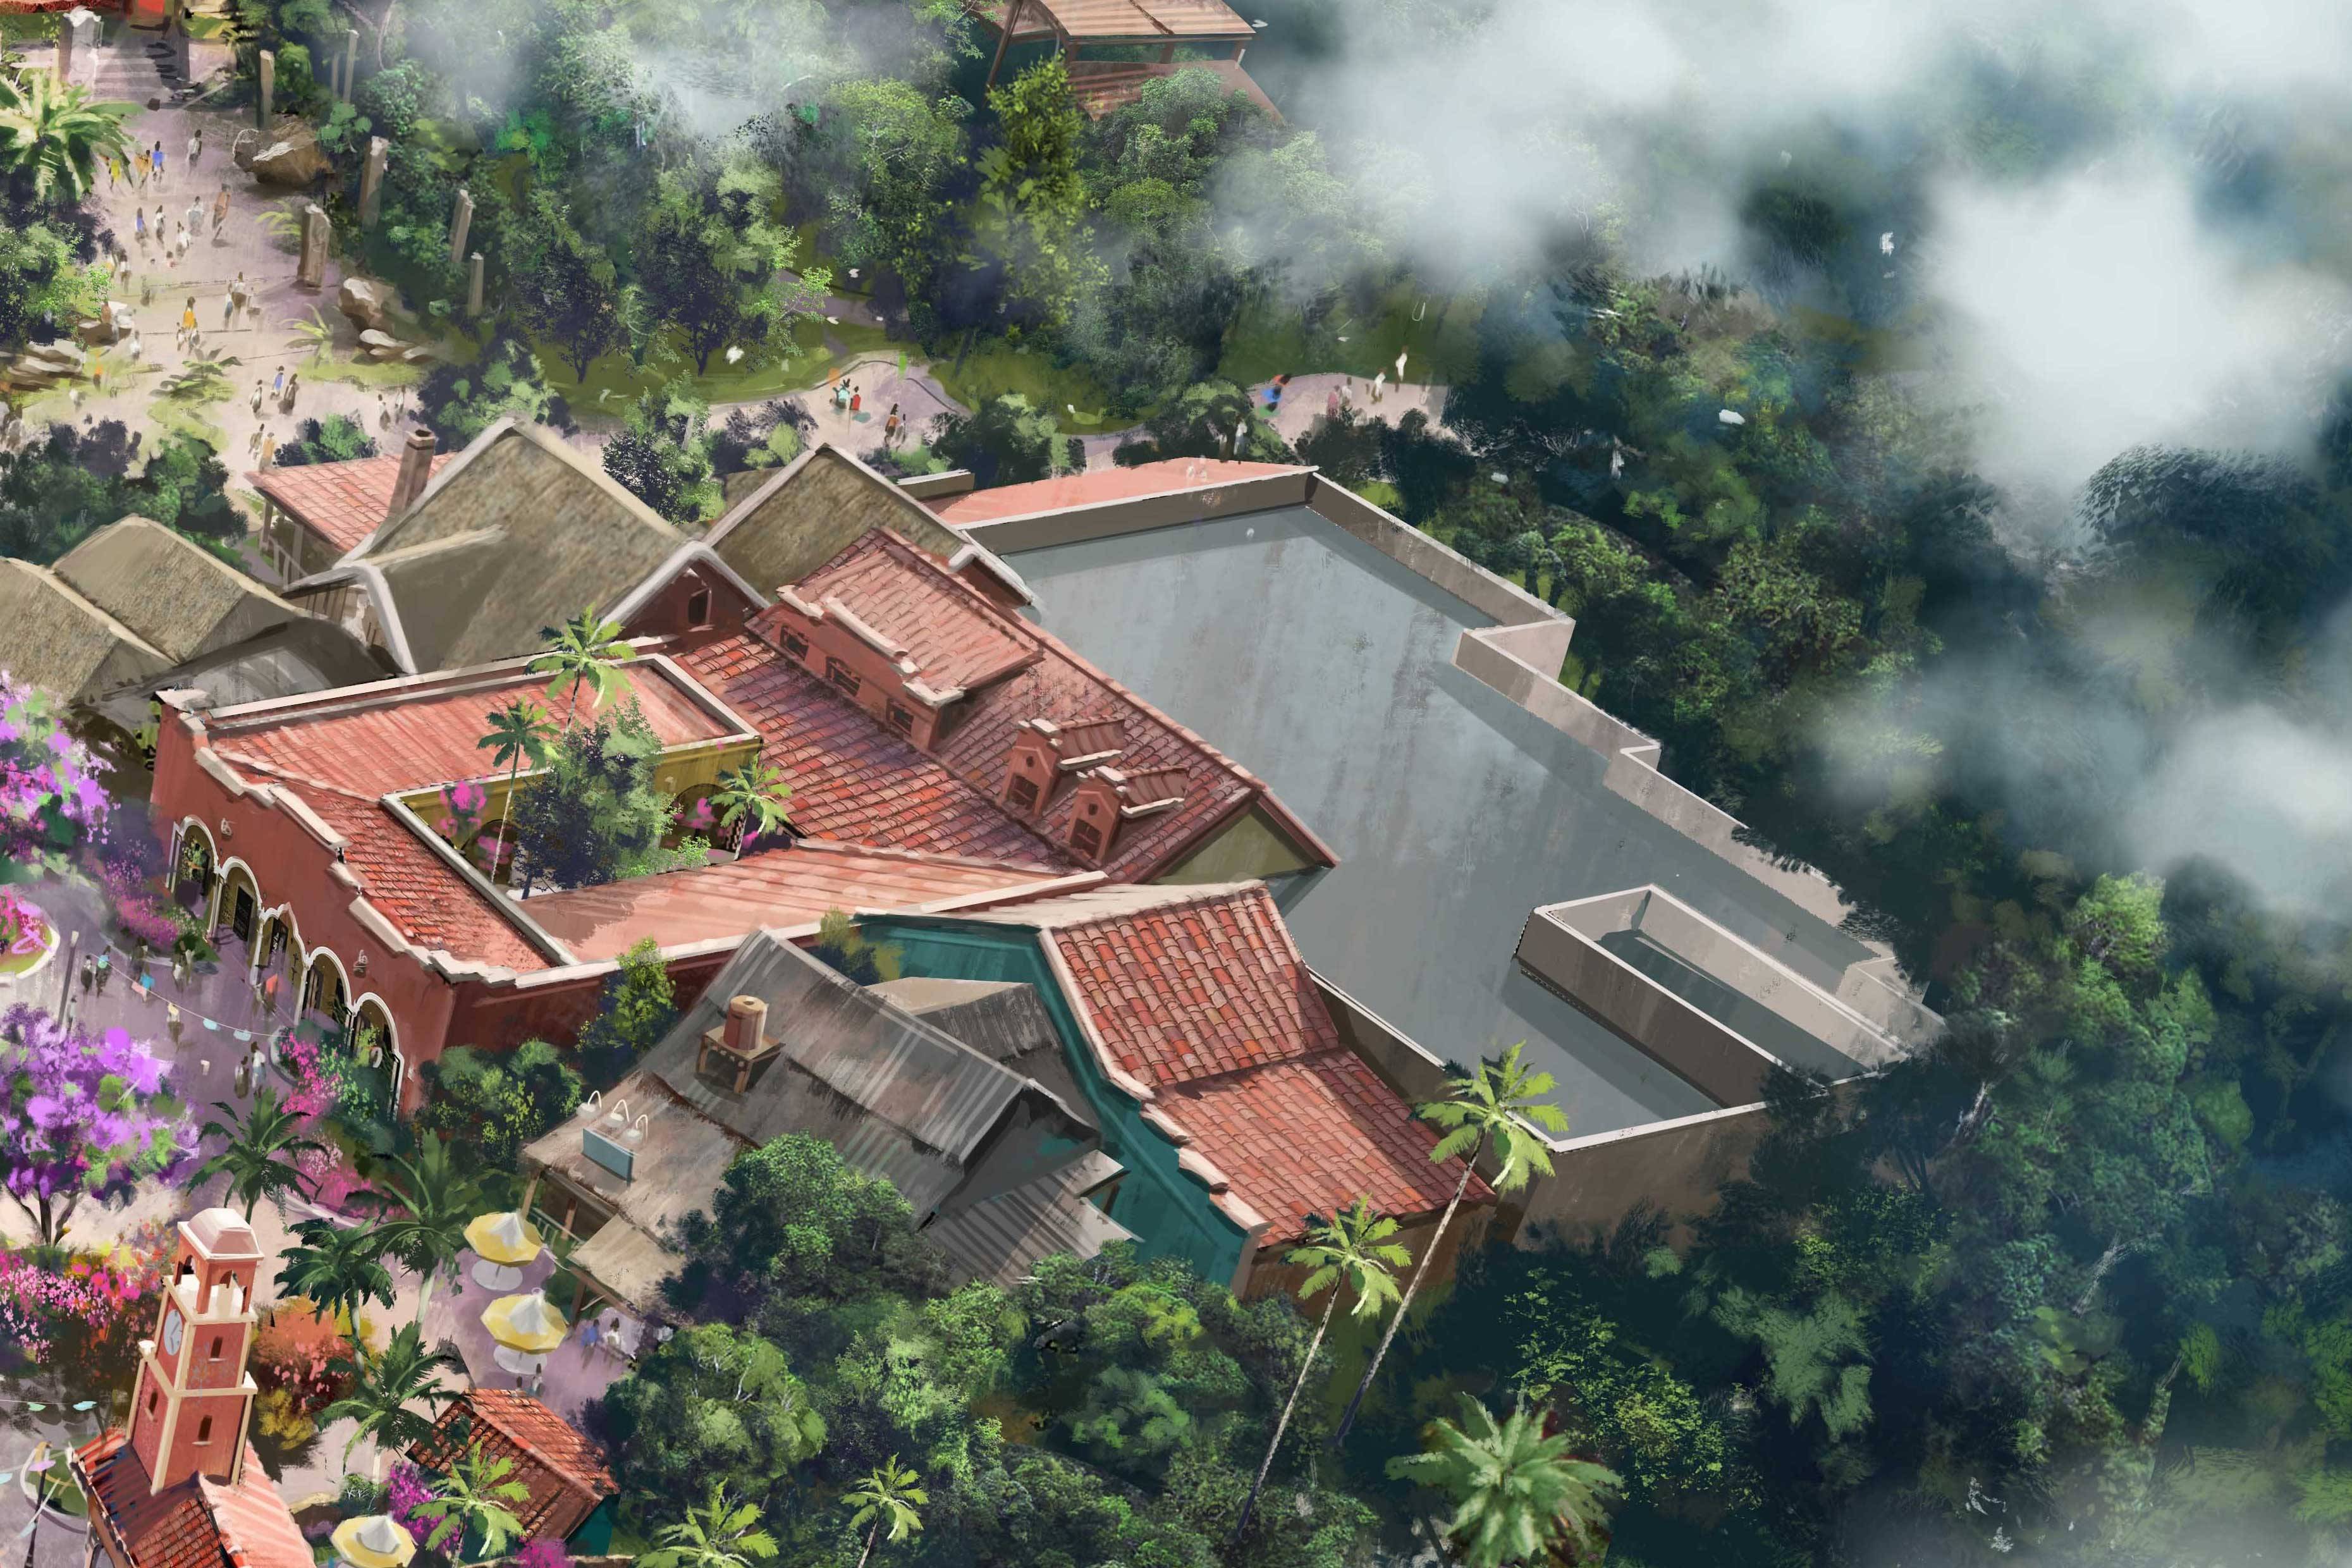 Tropical Americas Encanto land concept art at Disney's Animal Kingdom